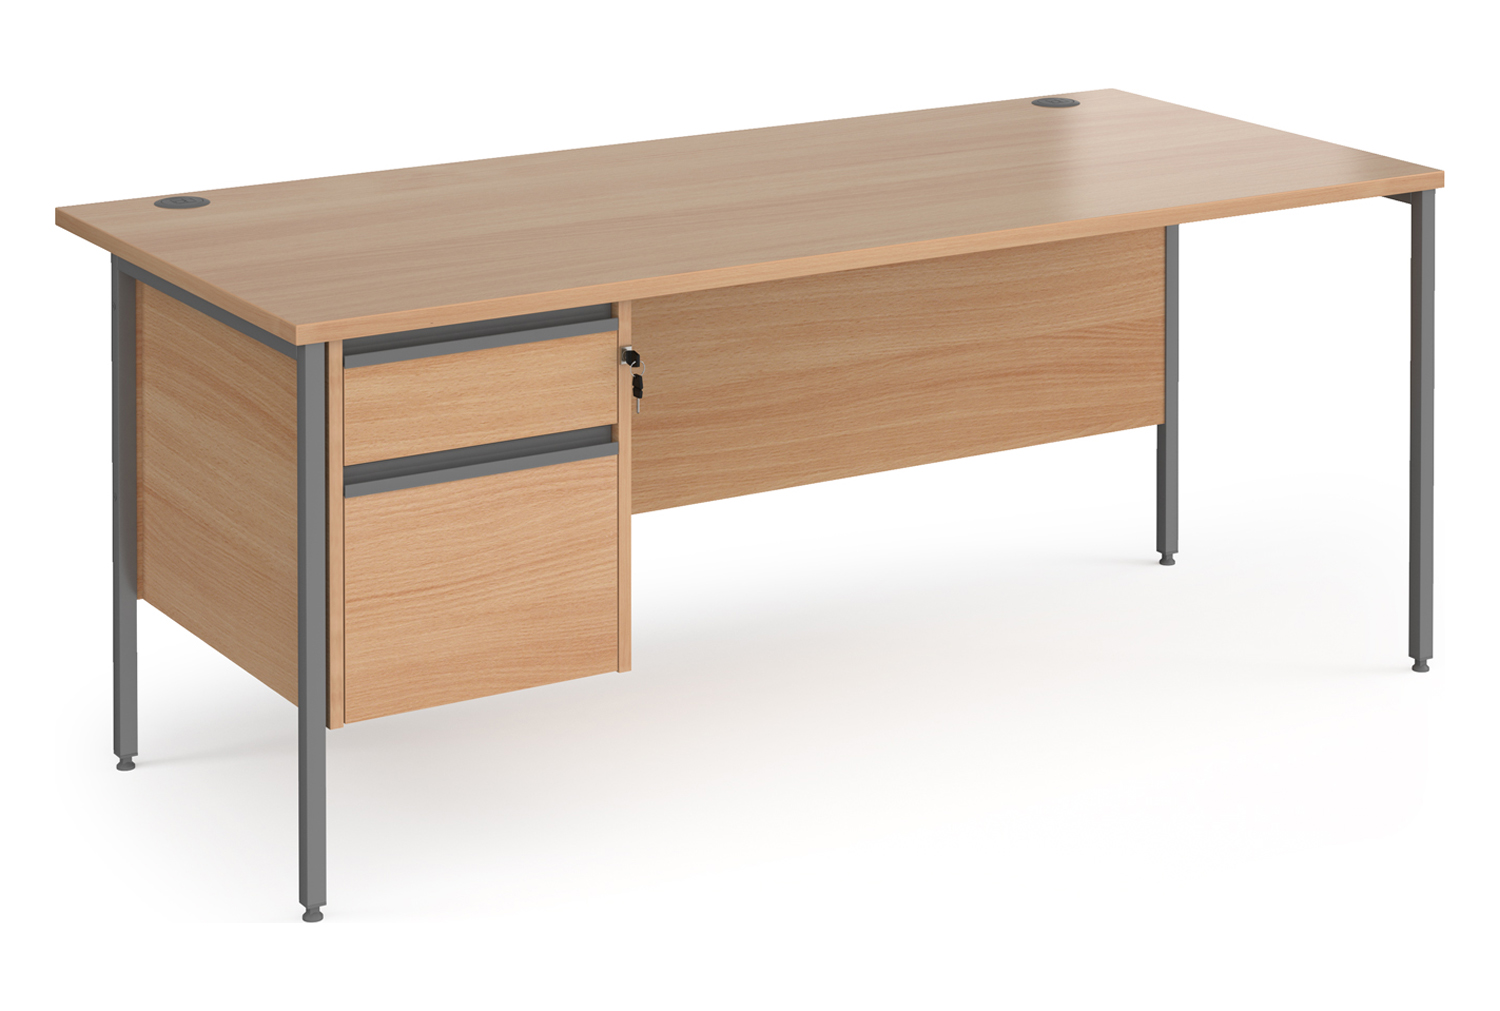 Value Line Classic+ Rectangular H-Leg Office Desk 2 Drawers (Graphite Leg), 180wx80dx73h (cm), Beech